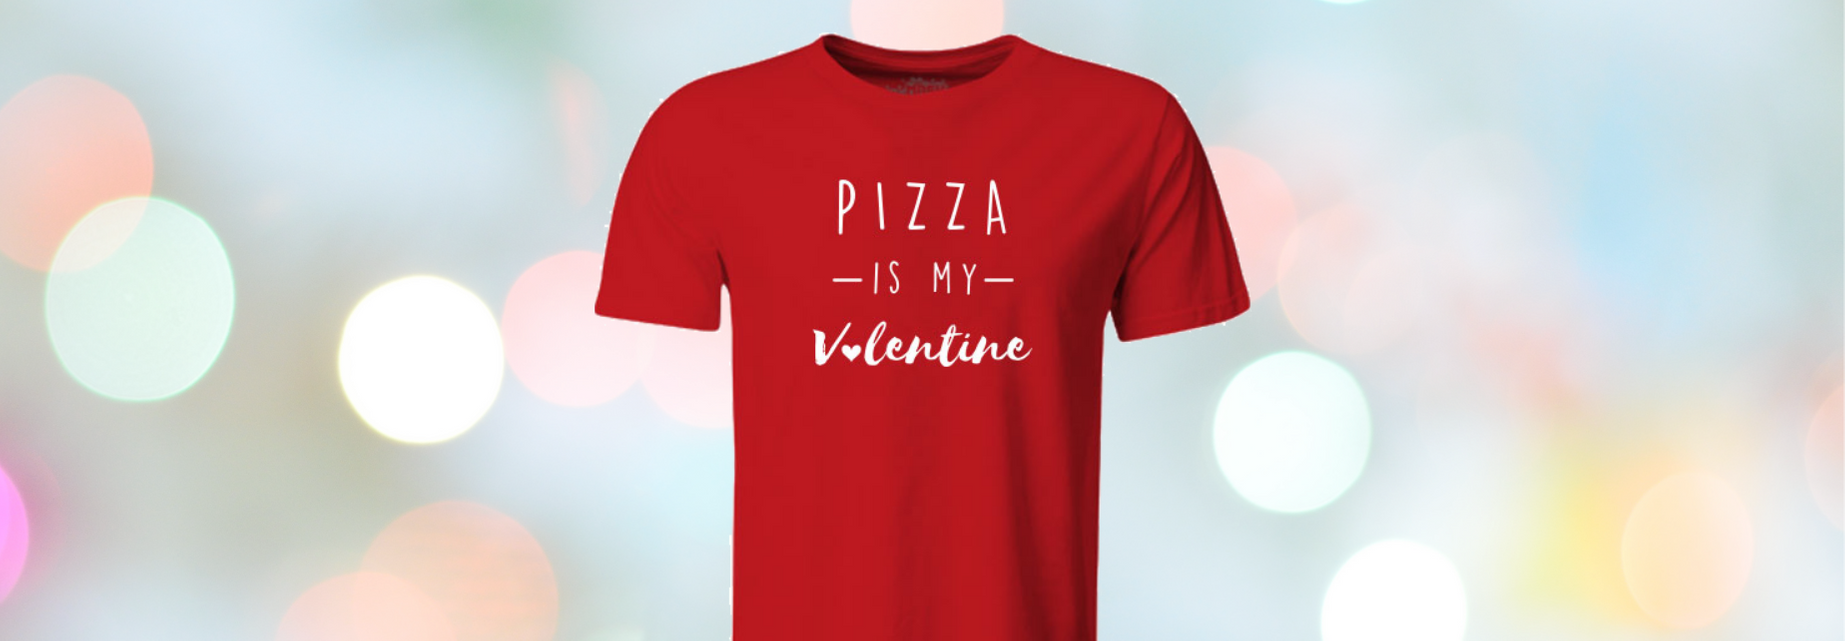 Pizza is my Valentine 